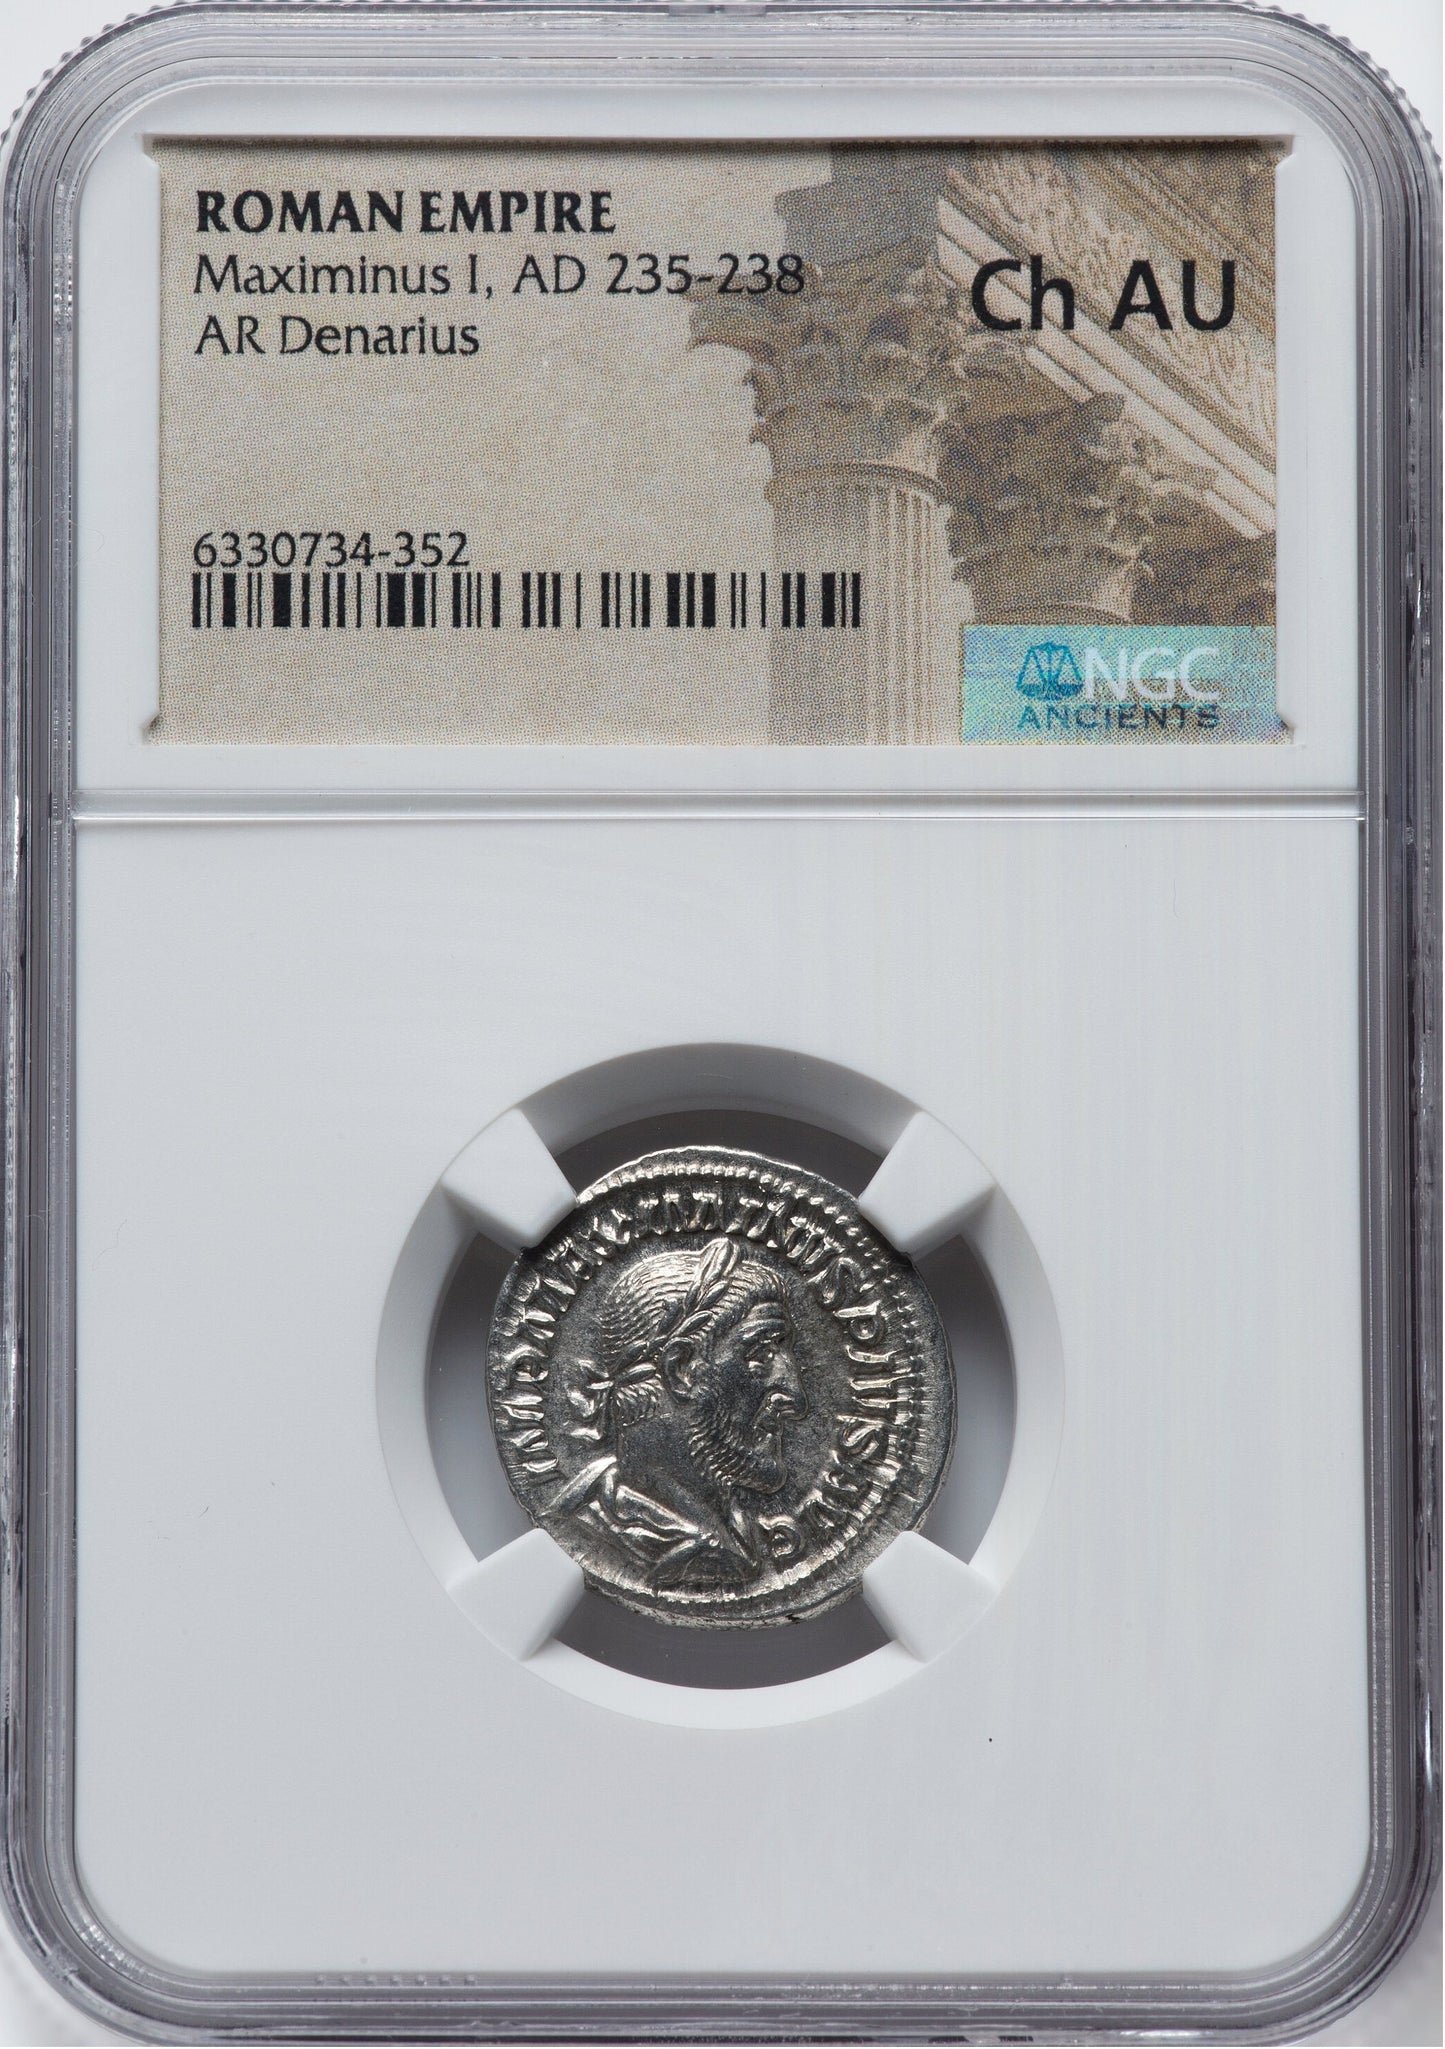 Roman Empire - Maximinus I - Silver Denarius - NGC Ch AU - RIC:3